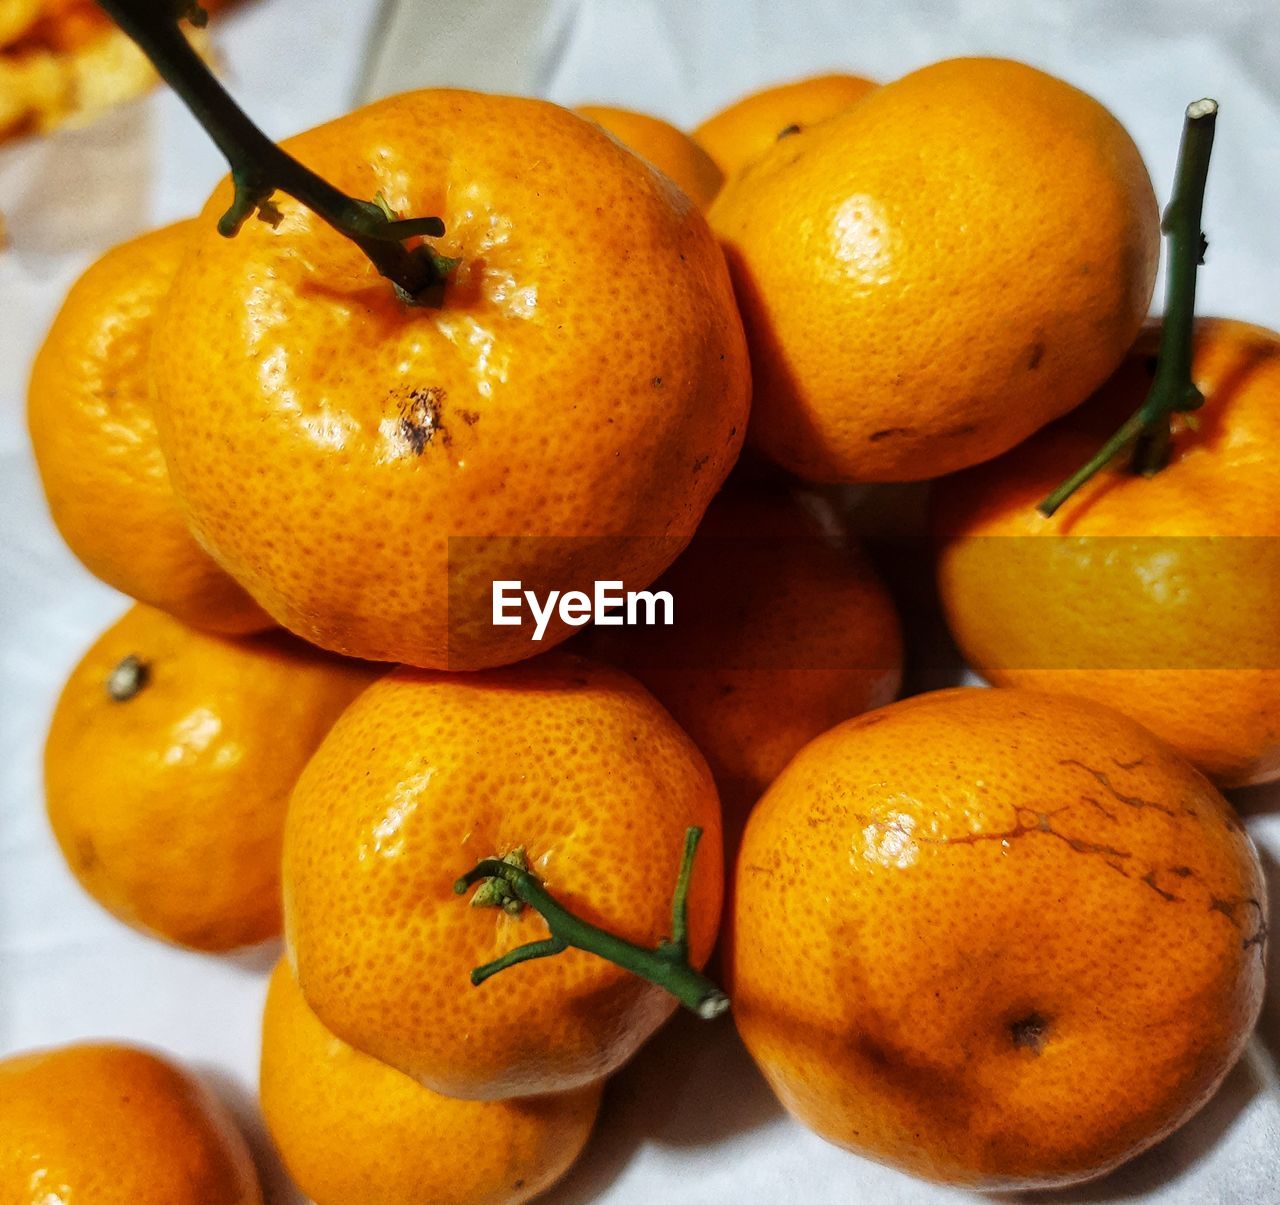 Oranges are not always sour